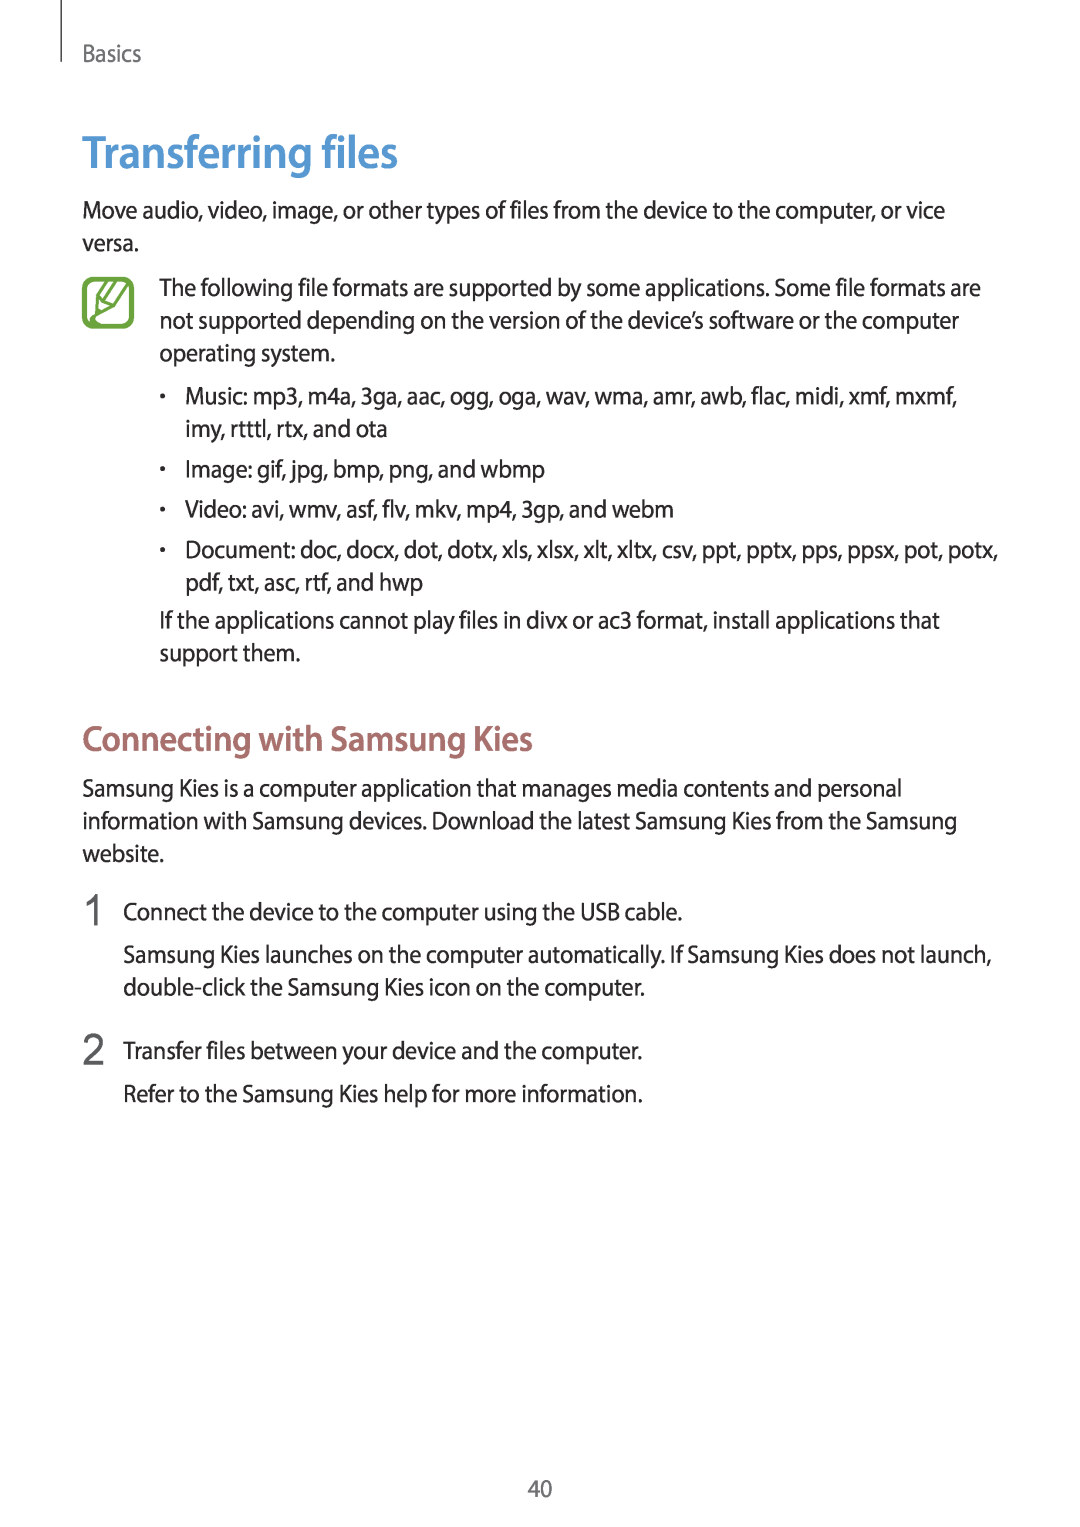 Samsung SM-G7105ZWAPTR, SM-G7105ZKAATO, SM-G7105ZWAATO manual Transferring files, Connecting with Samsung Kies, Basics 